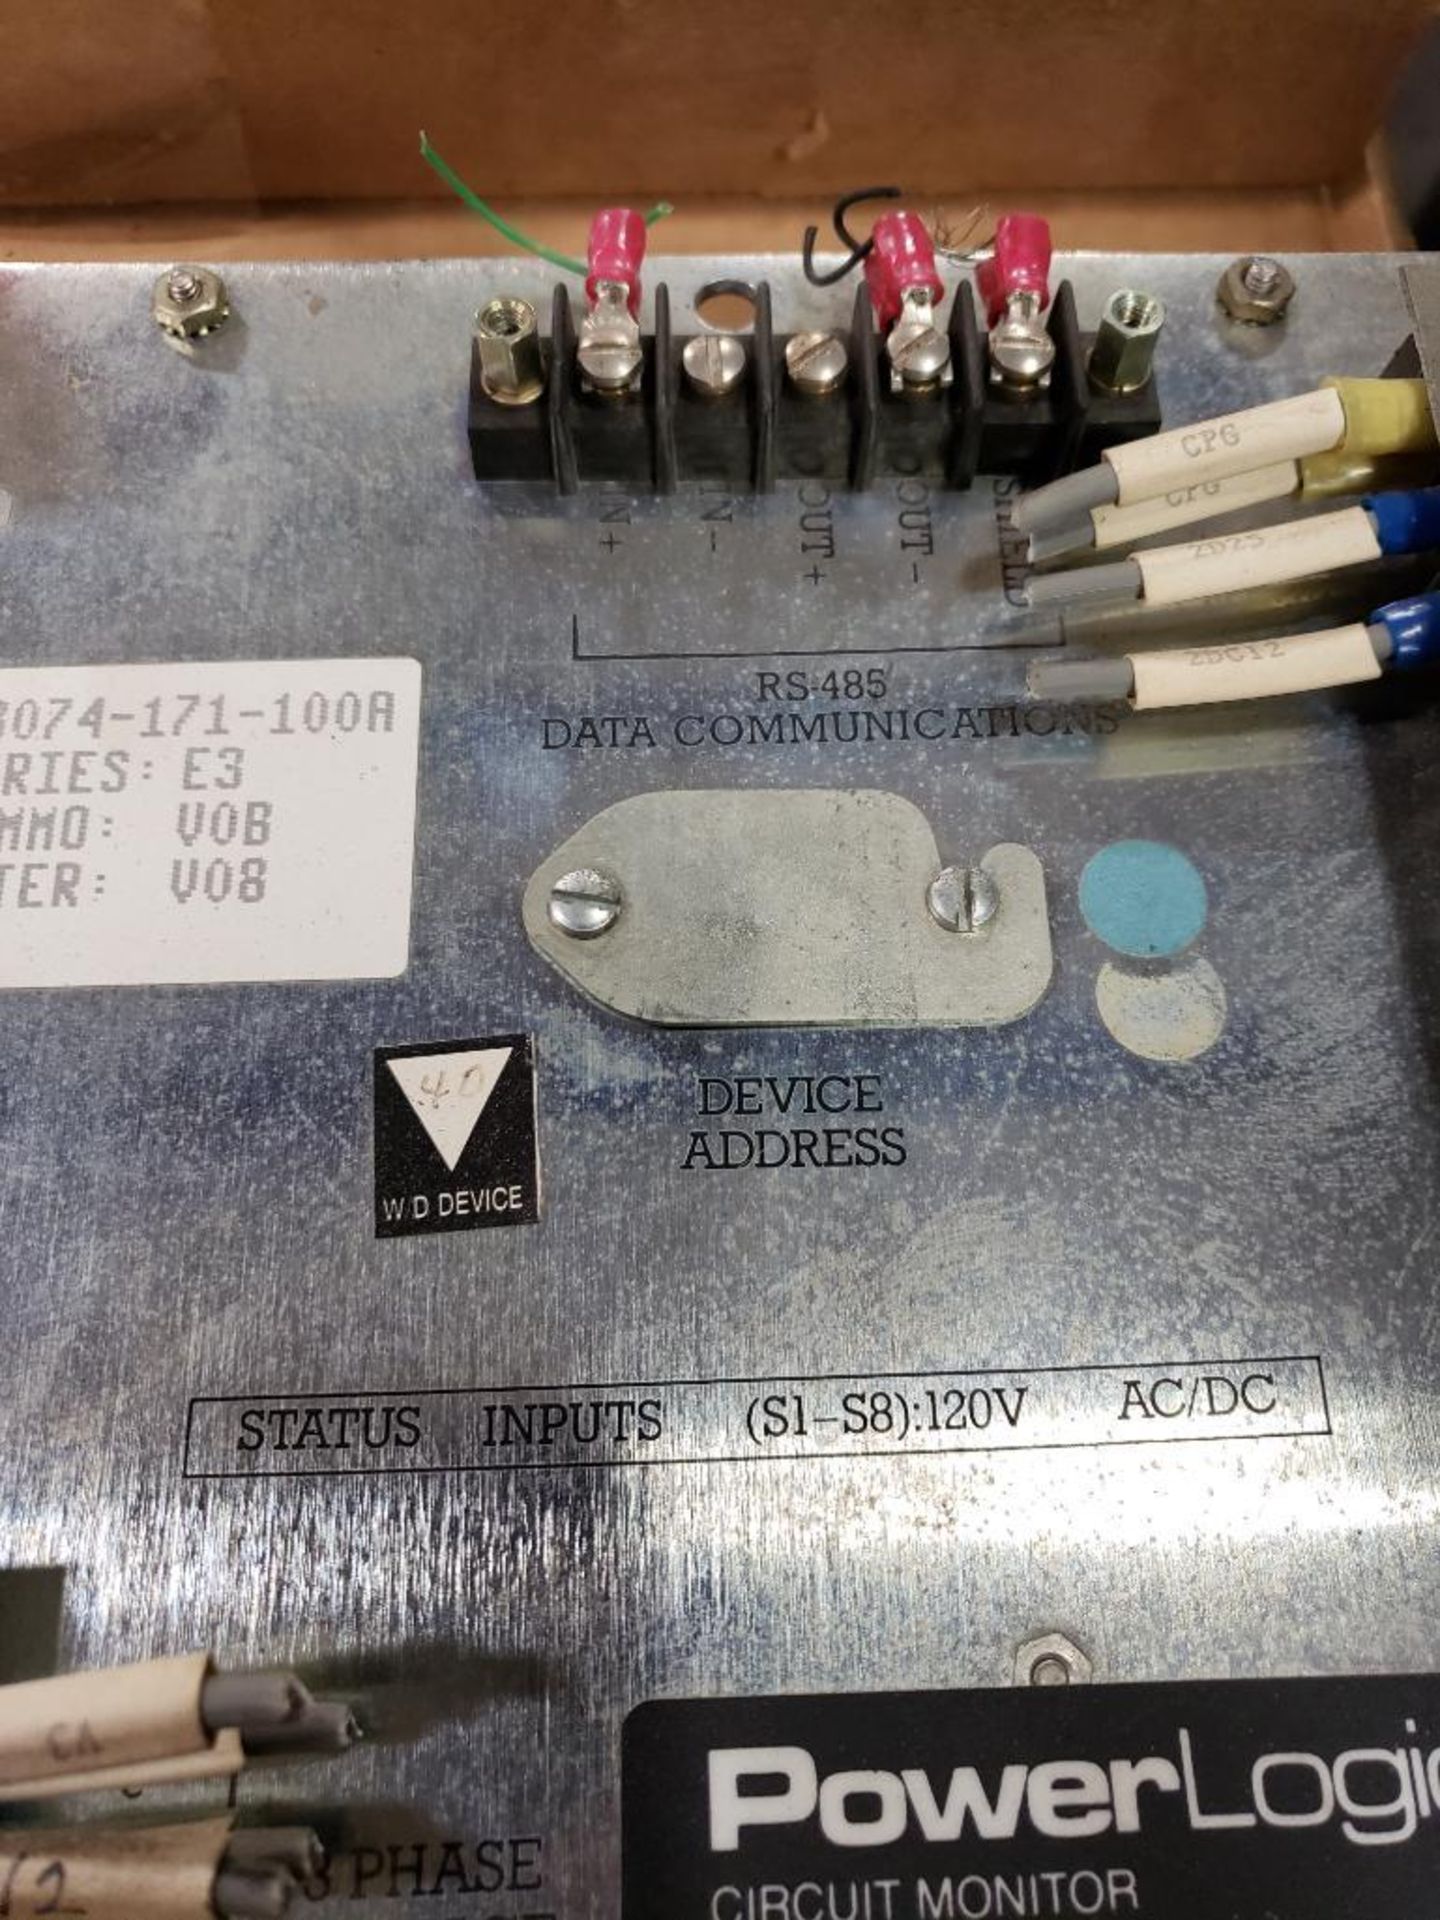 Square-D PowerLogic circuit monitor. Model: CM-108, Cat. No.: CM108X1, Class 3020. - Image 5 of 5